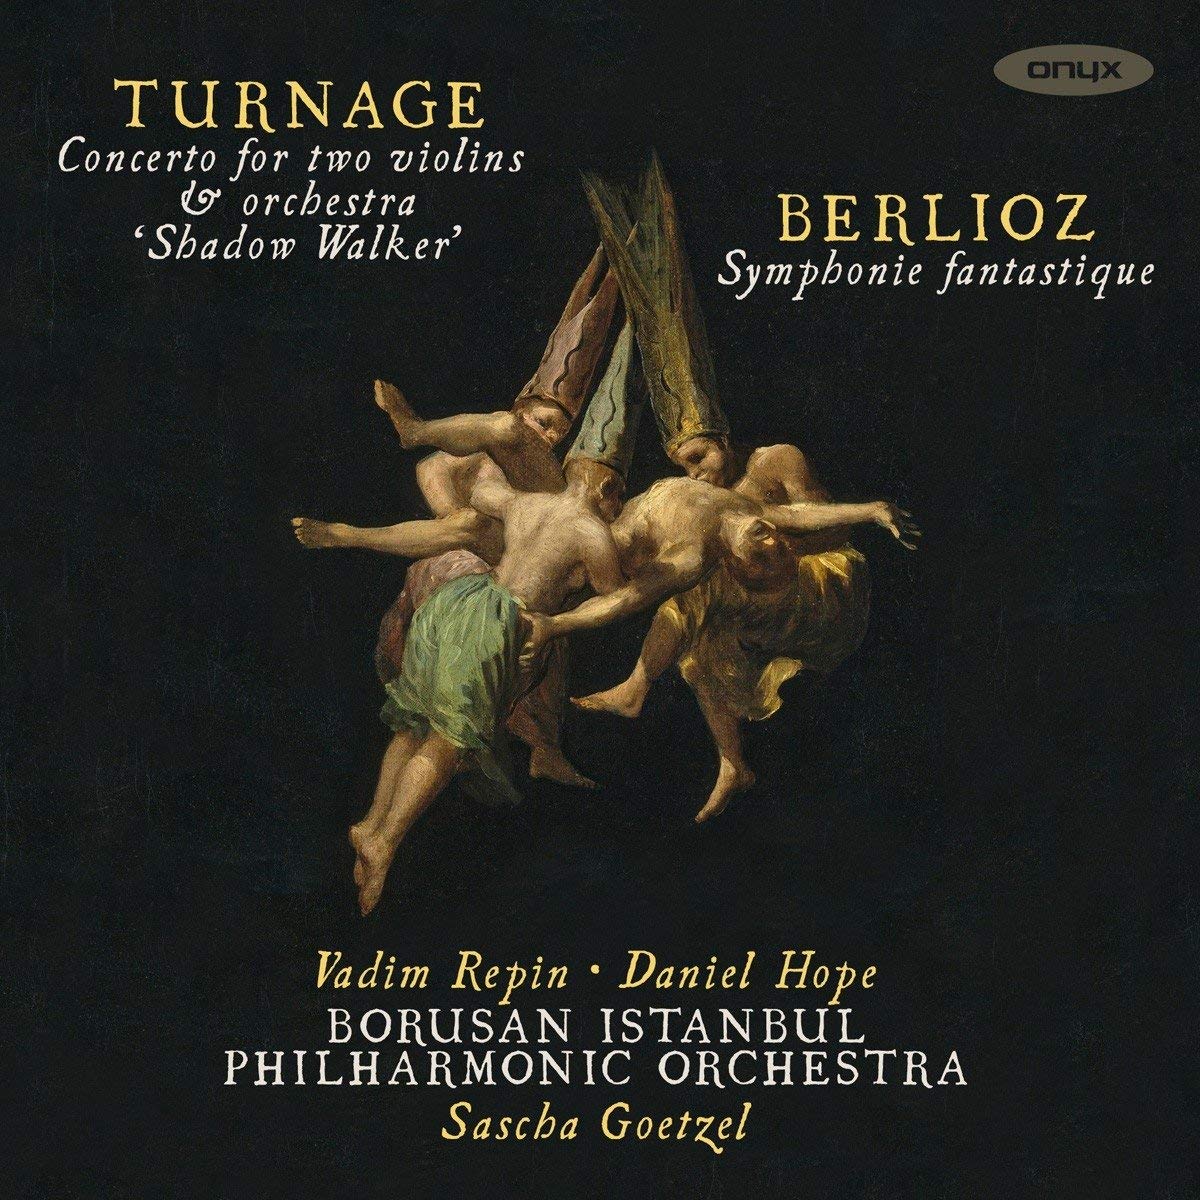 Turnage and Berlioz